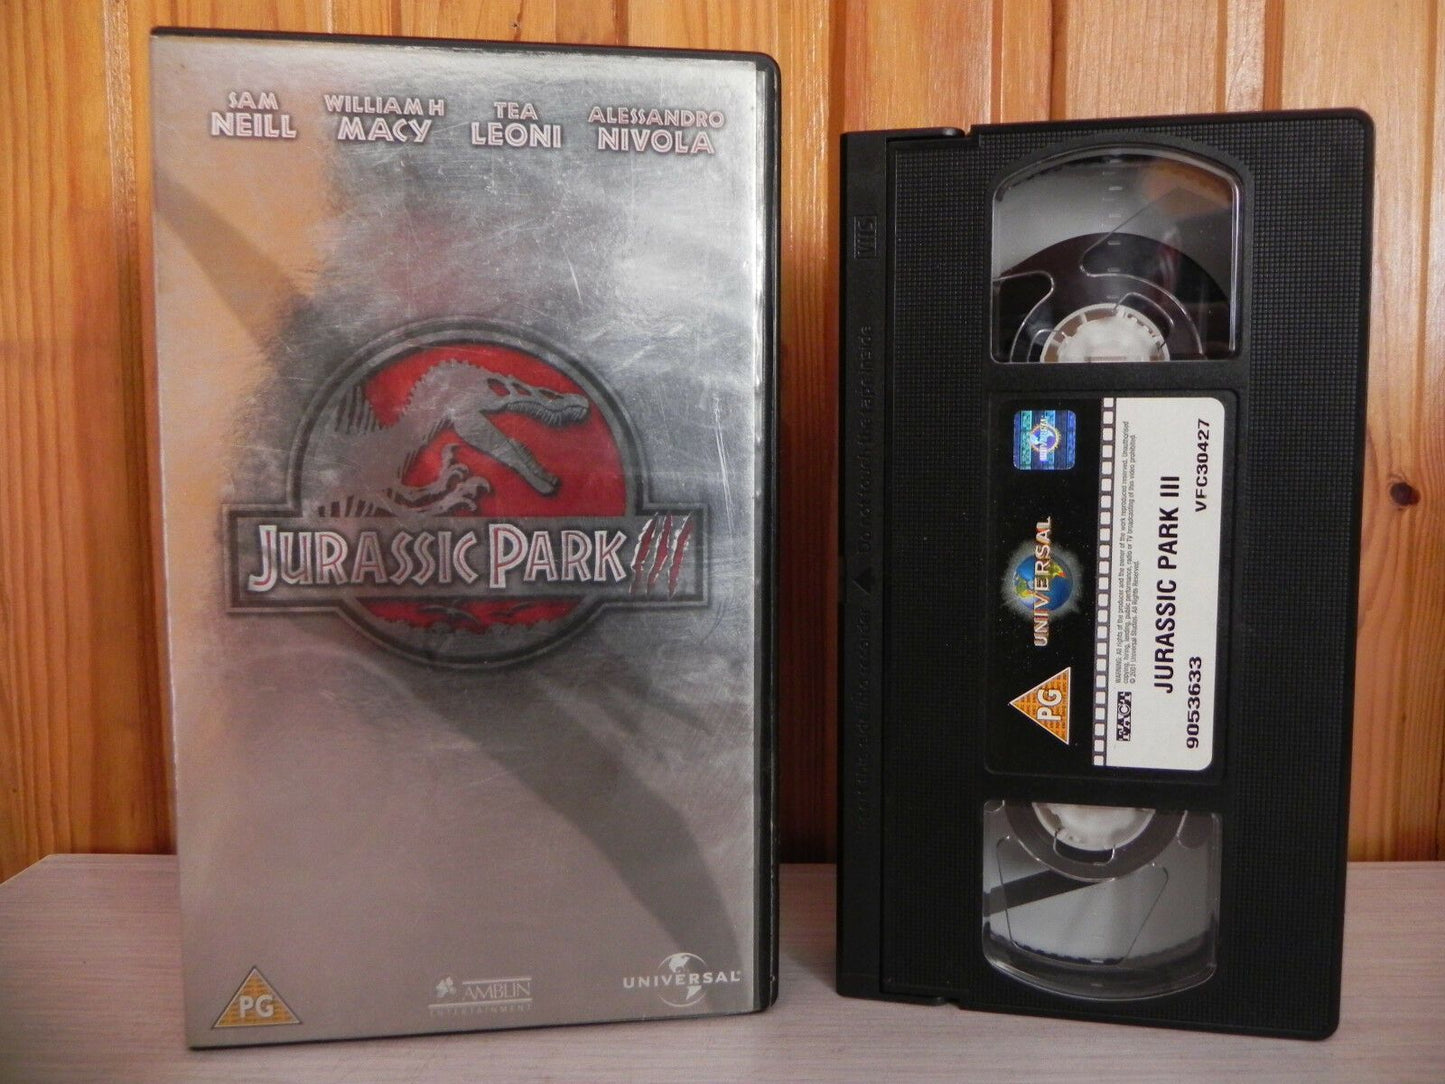 Jurassic Park 3 - Iconic Sleeve Art - Sam Neill - Action Drama - Pal Video - VHS-